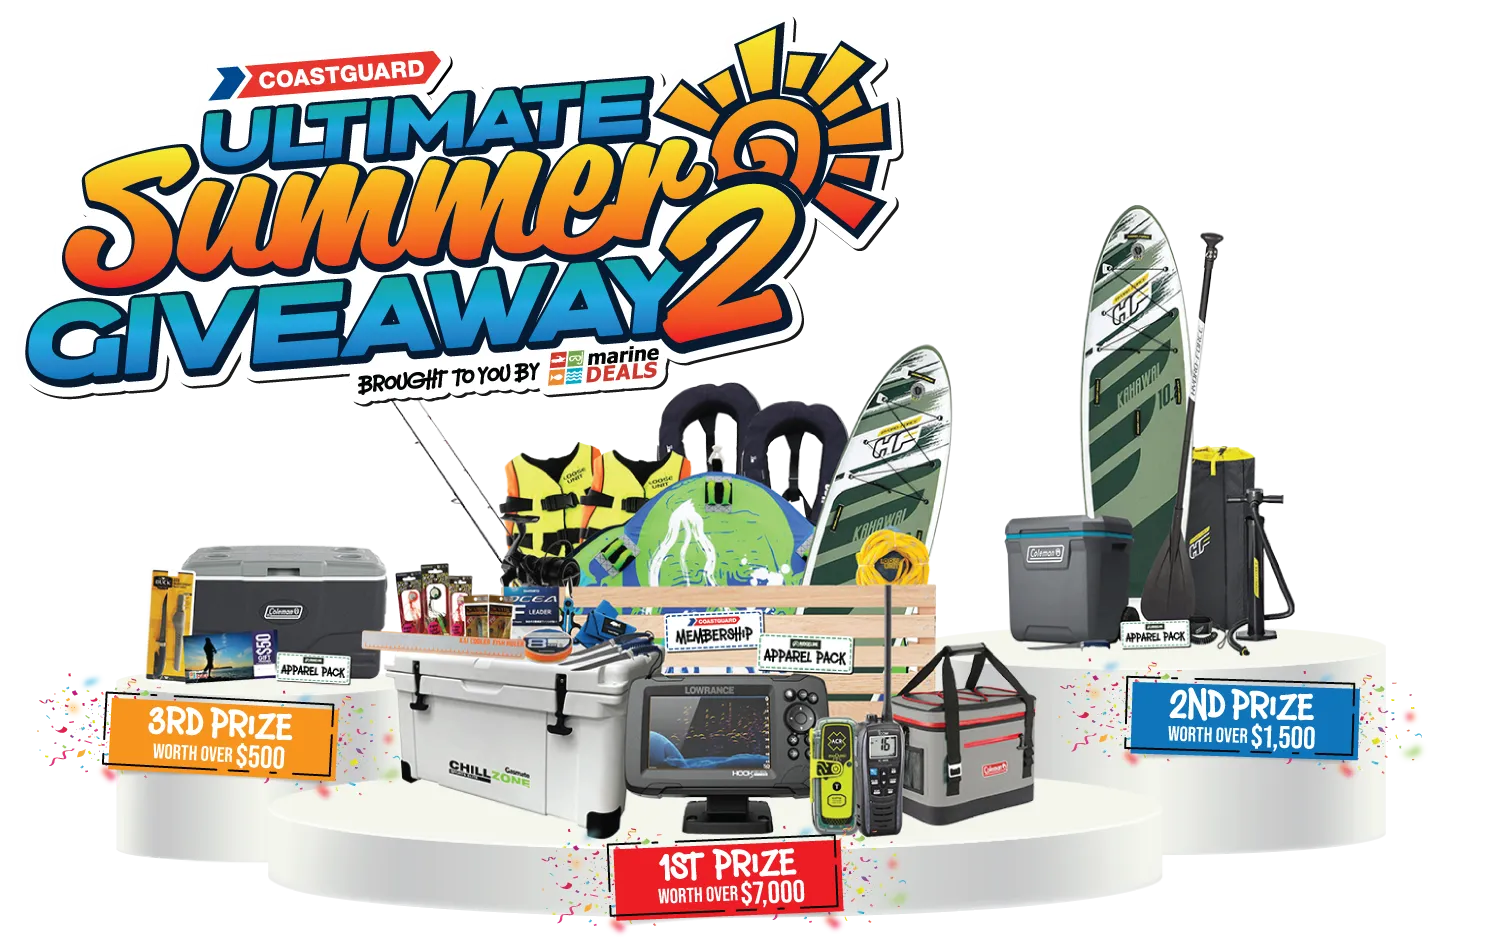 Coastguard Ultimate Summer Giveaway 2 Prizes